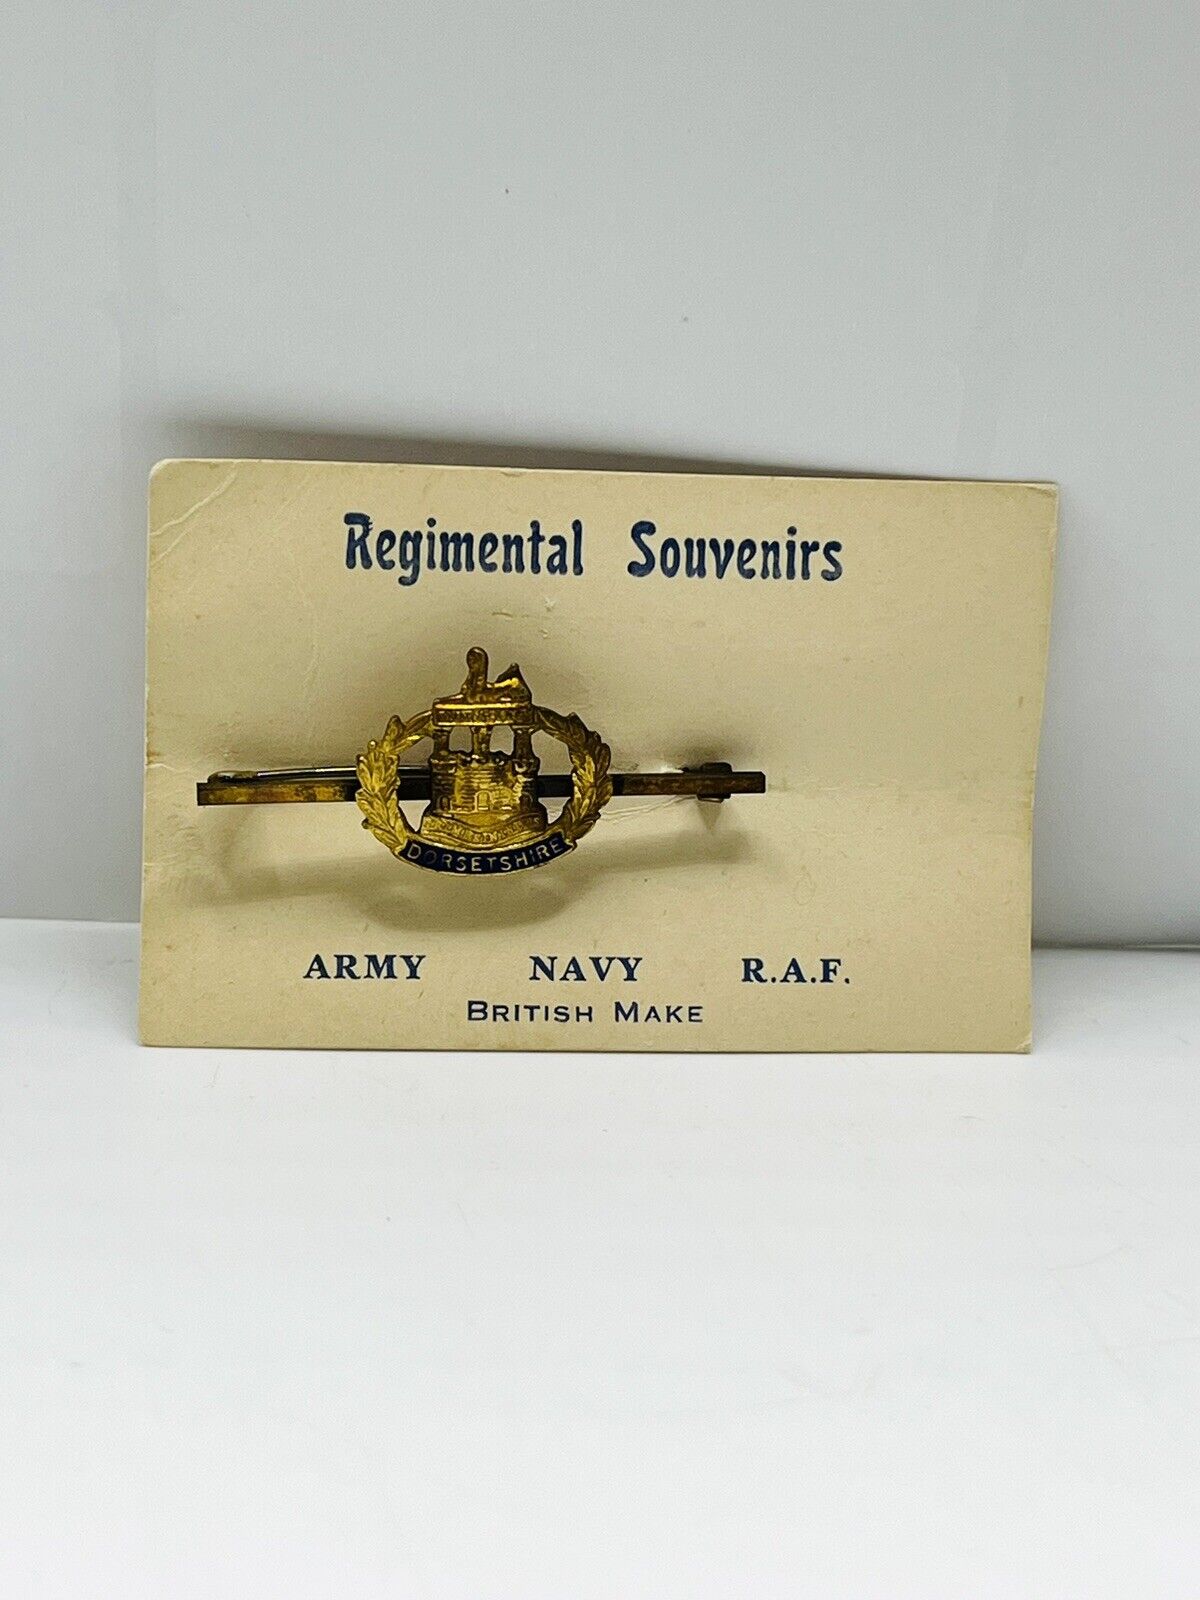 Vintage WW1 Dorsetshire Regiment Souvenir Pin British Make Army Navy R.A.F. War